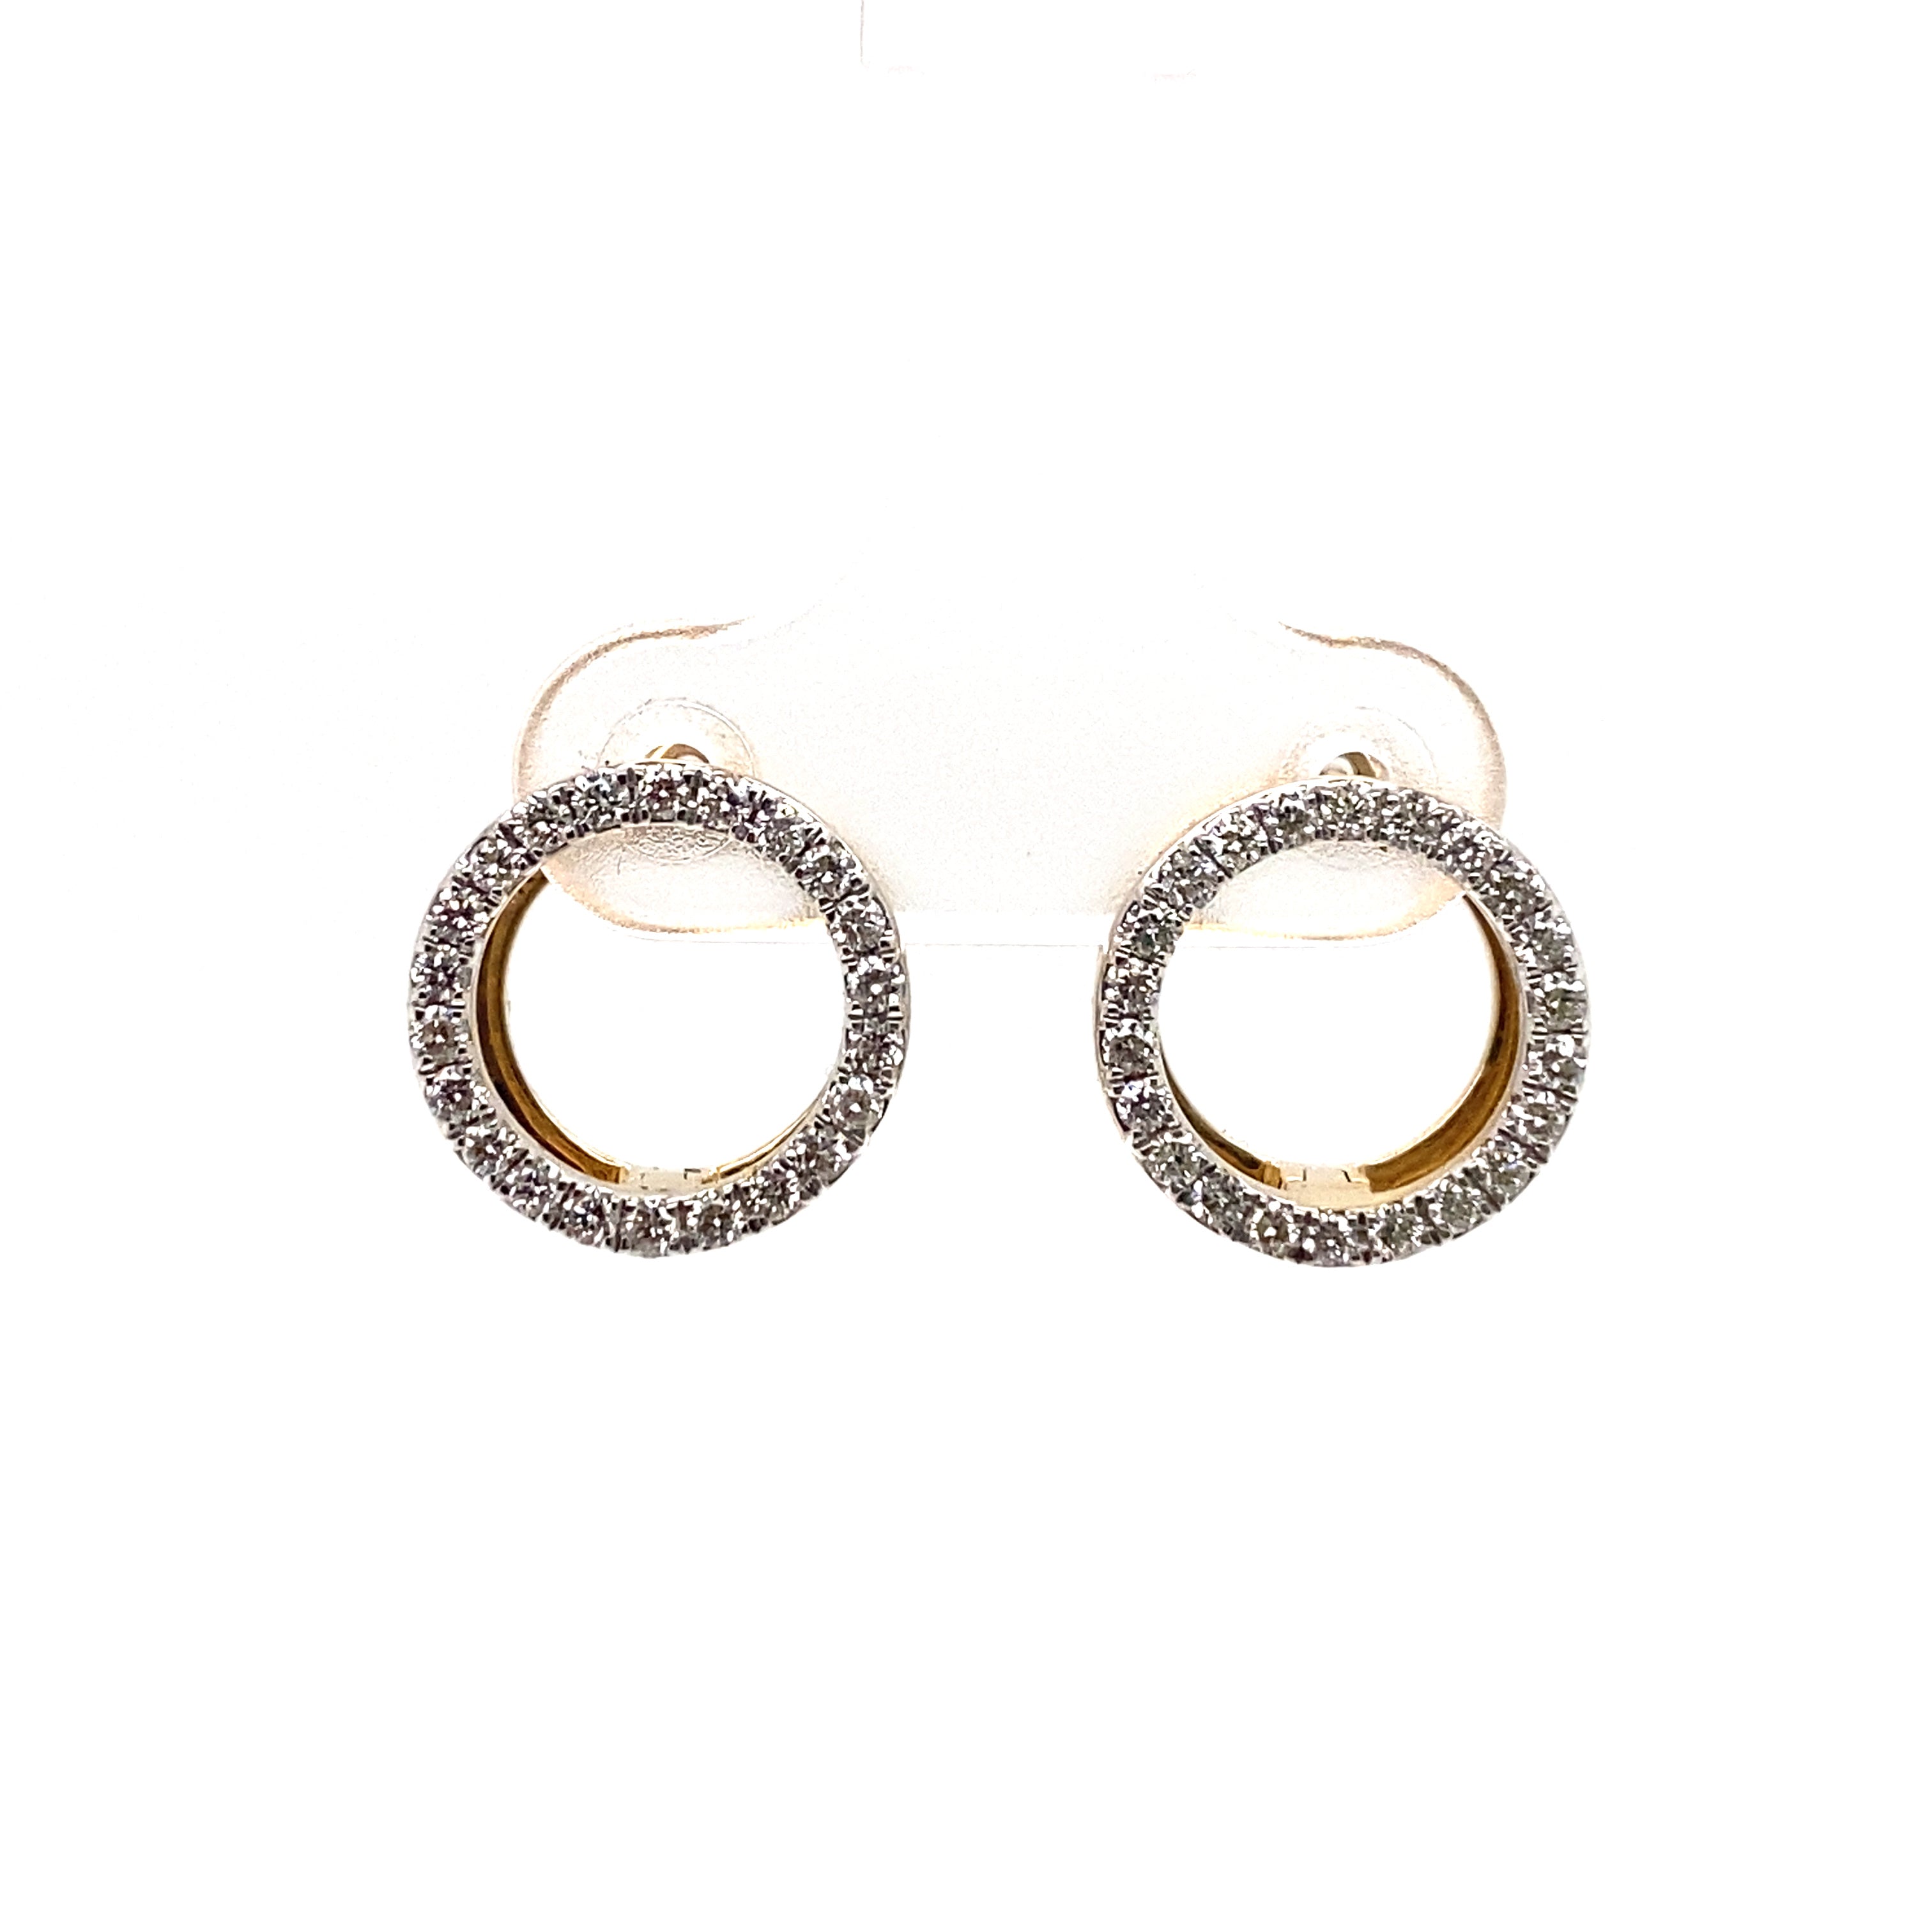 9ct yellow gold diamond circle earrings.